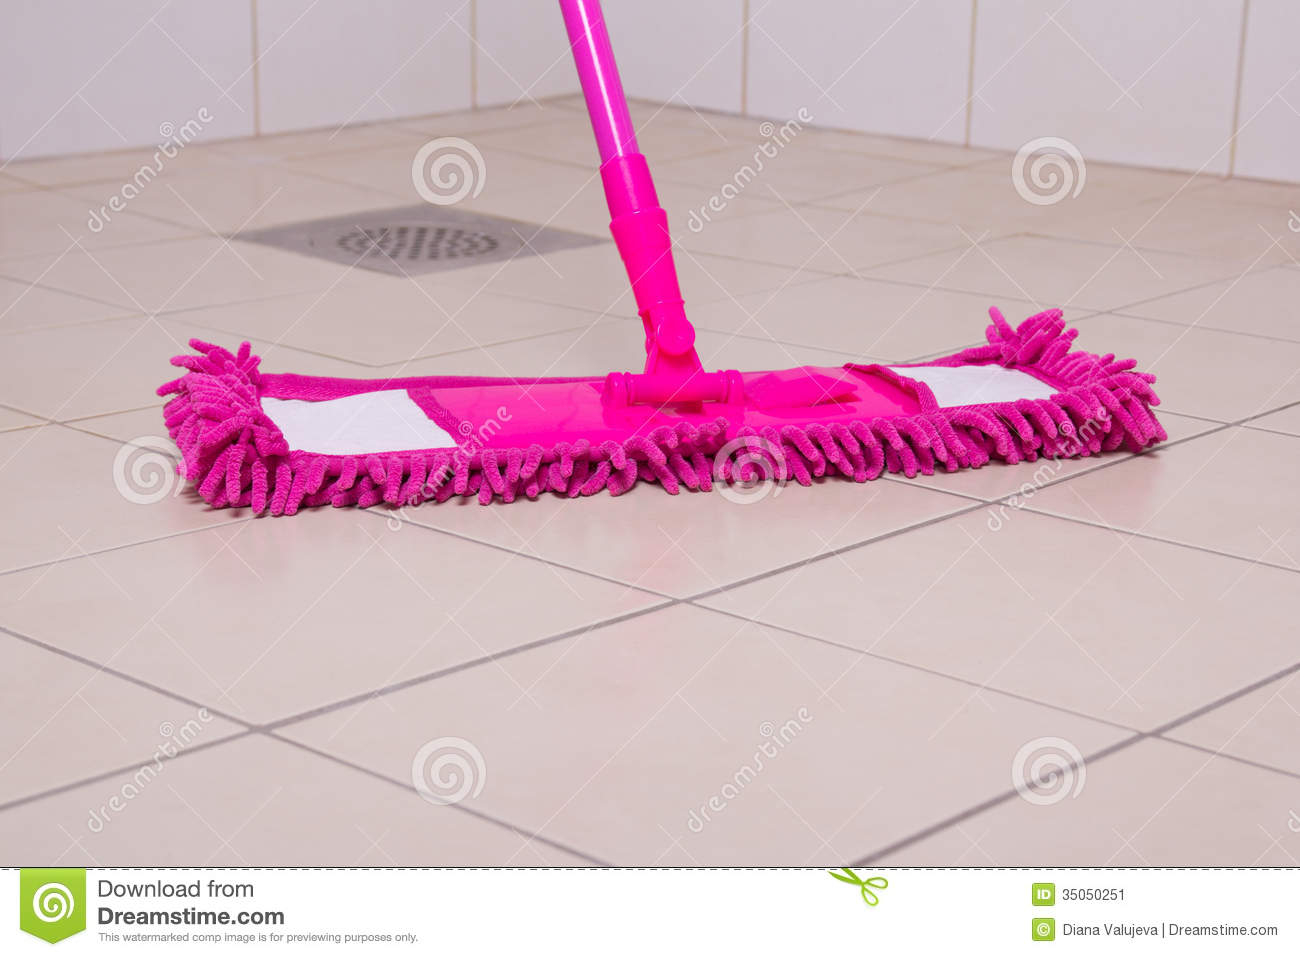 Pink Mop Cleaning Tile Floor In Bathroom